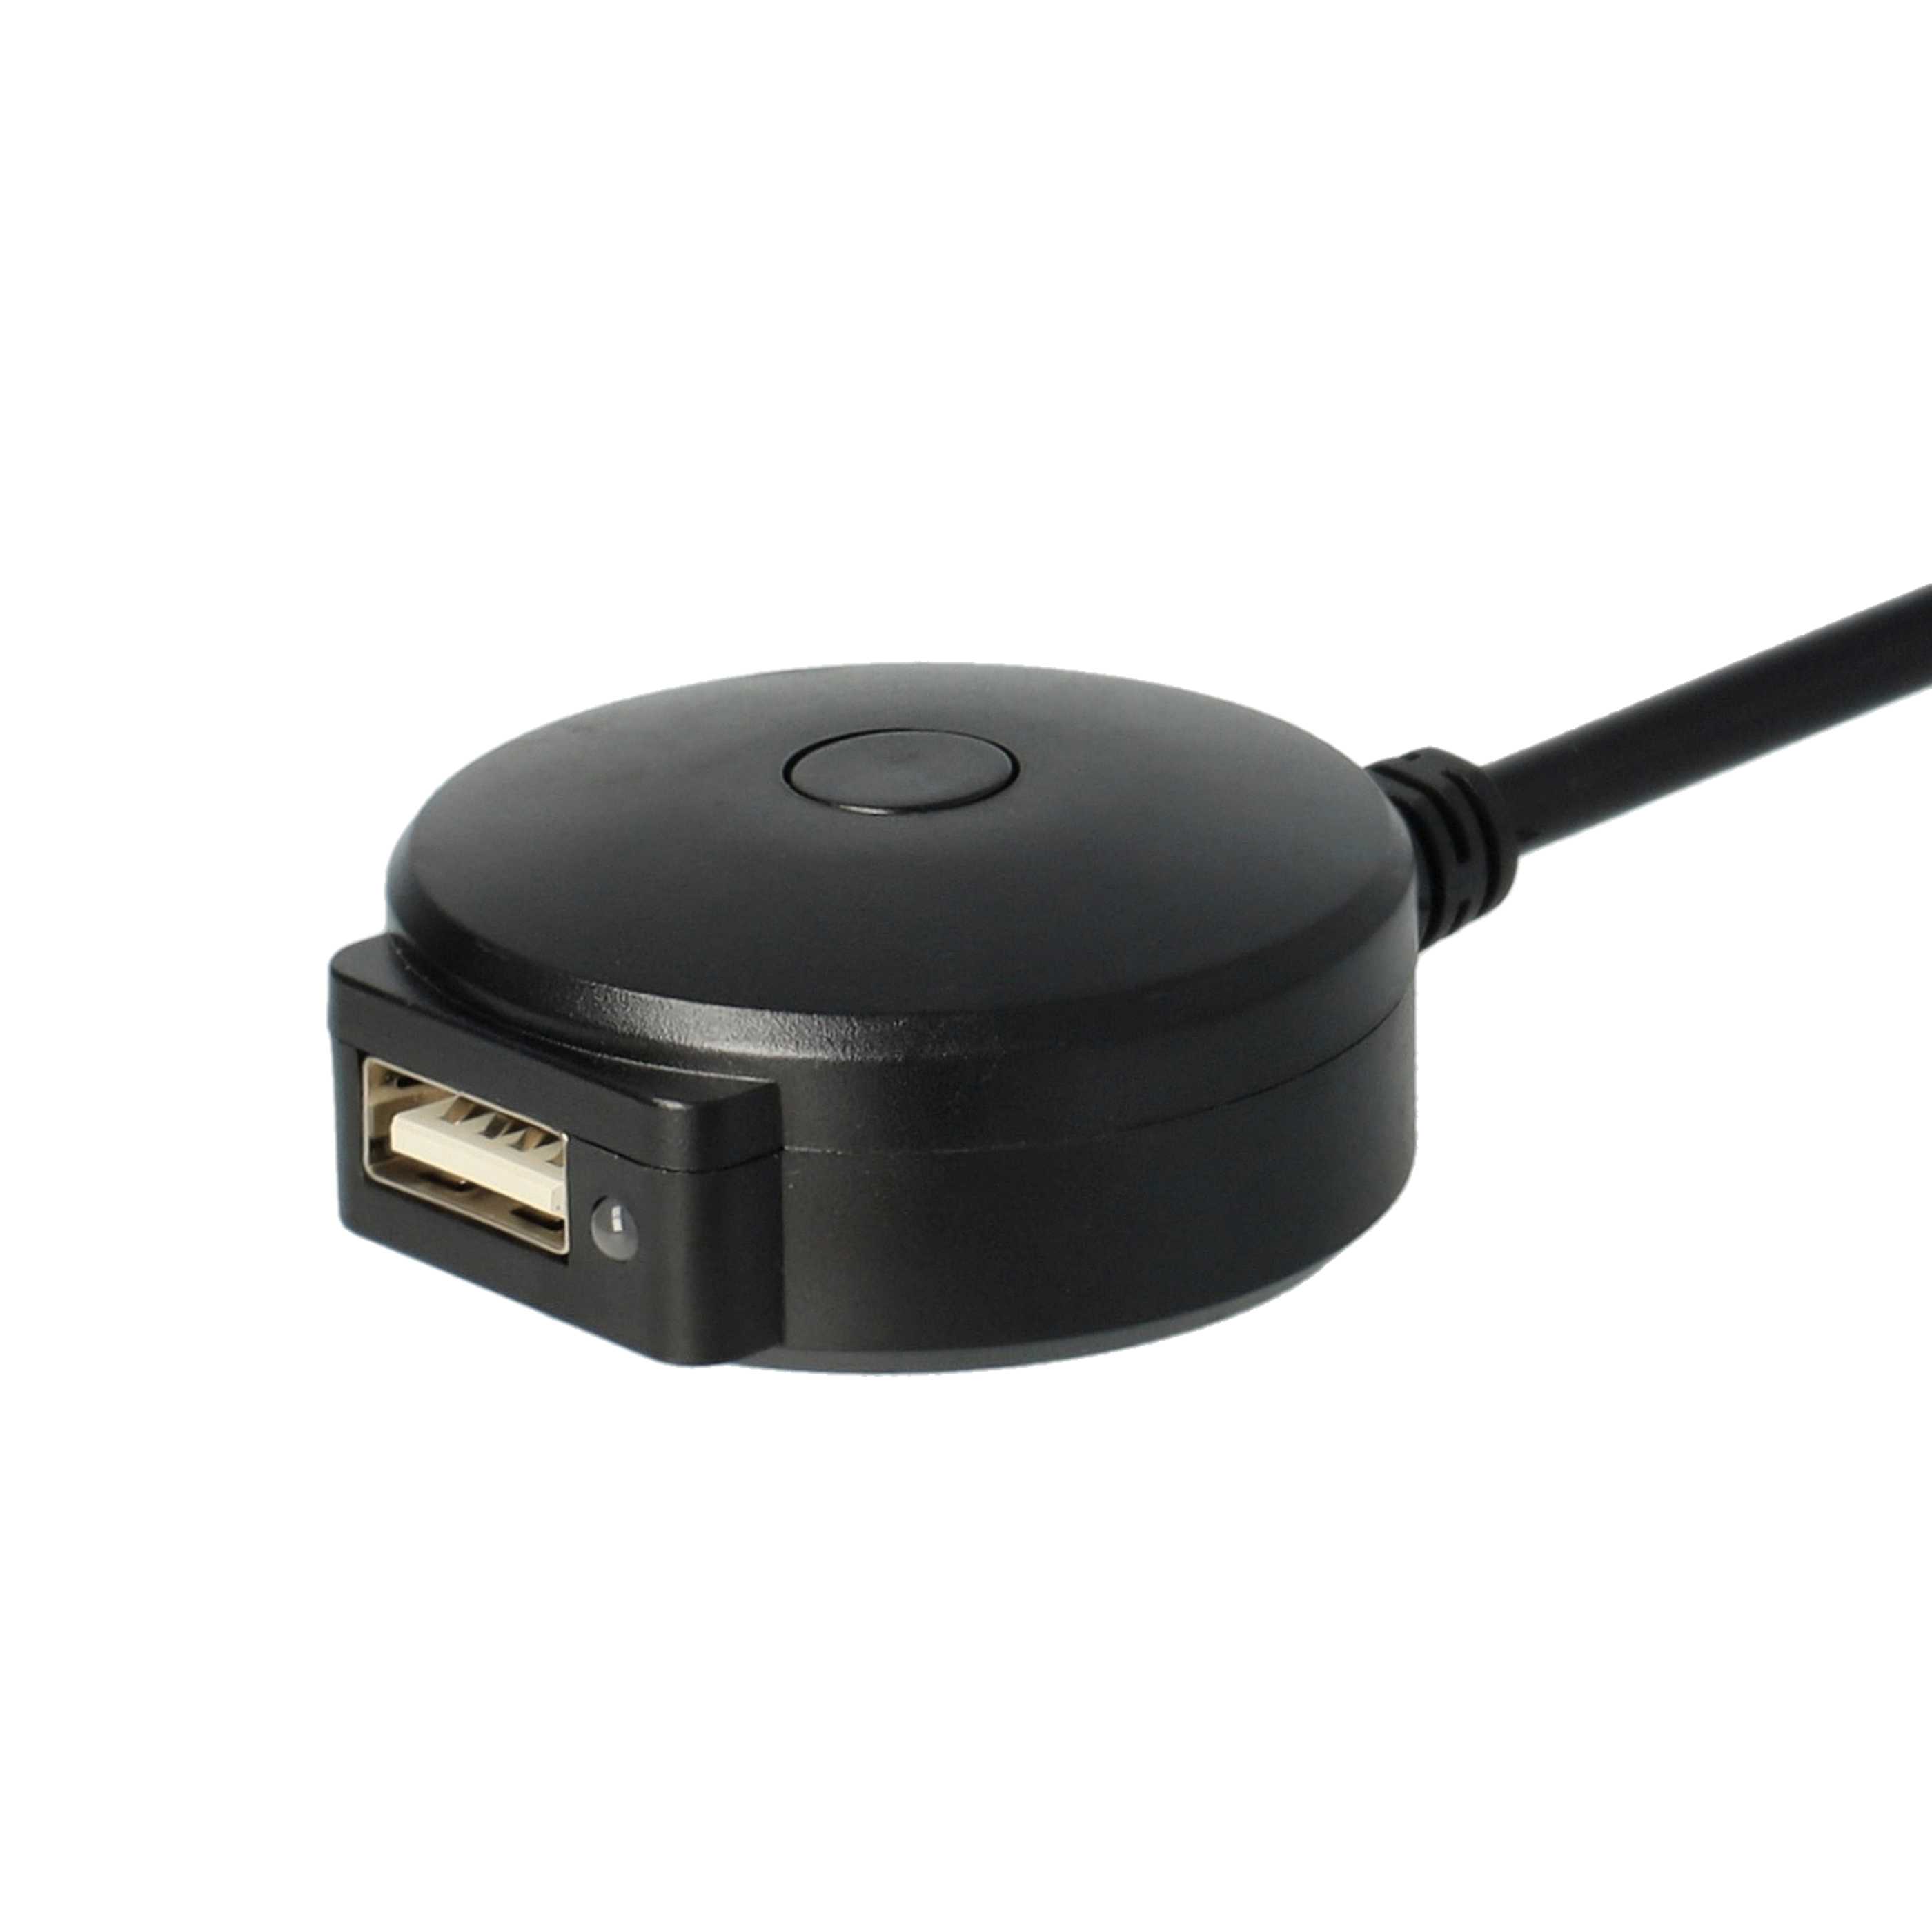 Adapteur audio AUX pour auto radio MINI, BMW R56 – USB, Bluetooth